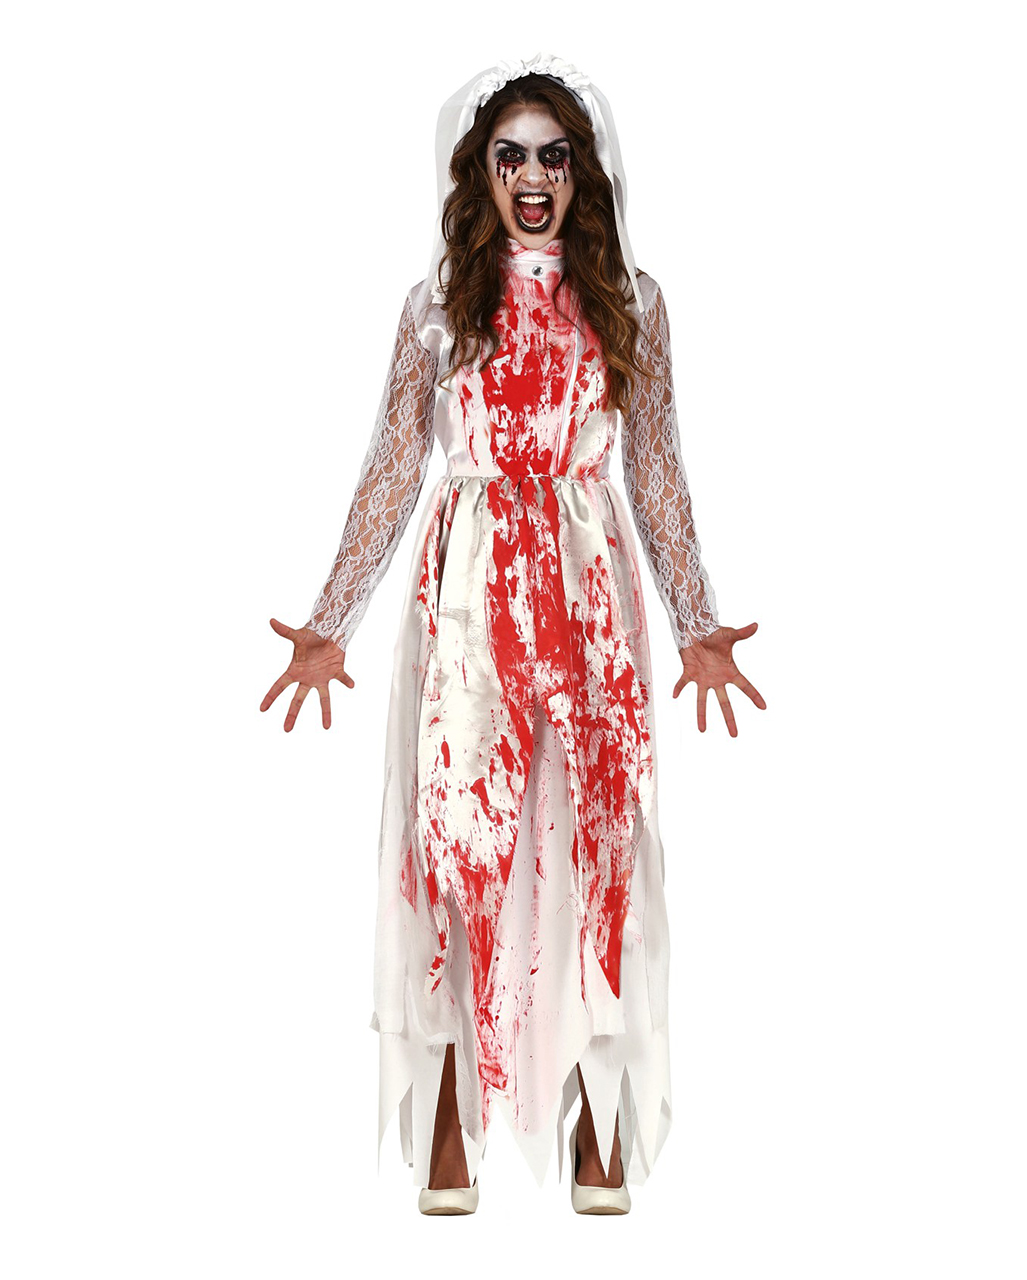 White Day Of The Dead Bride Costume | Women's Halloween Costume